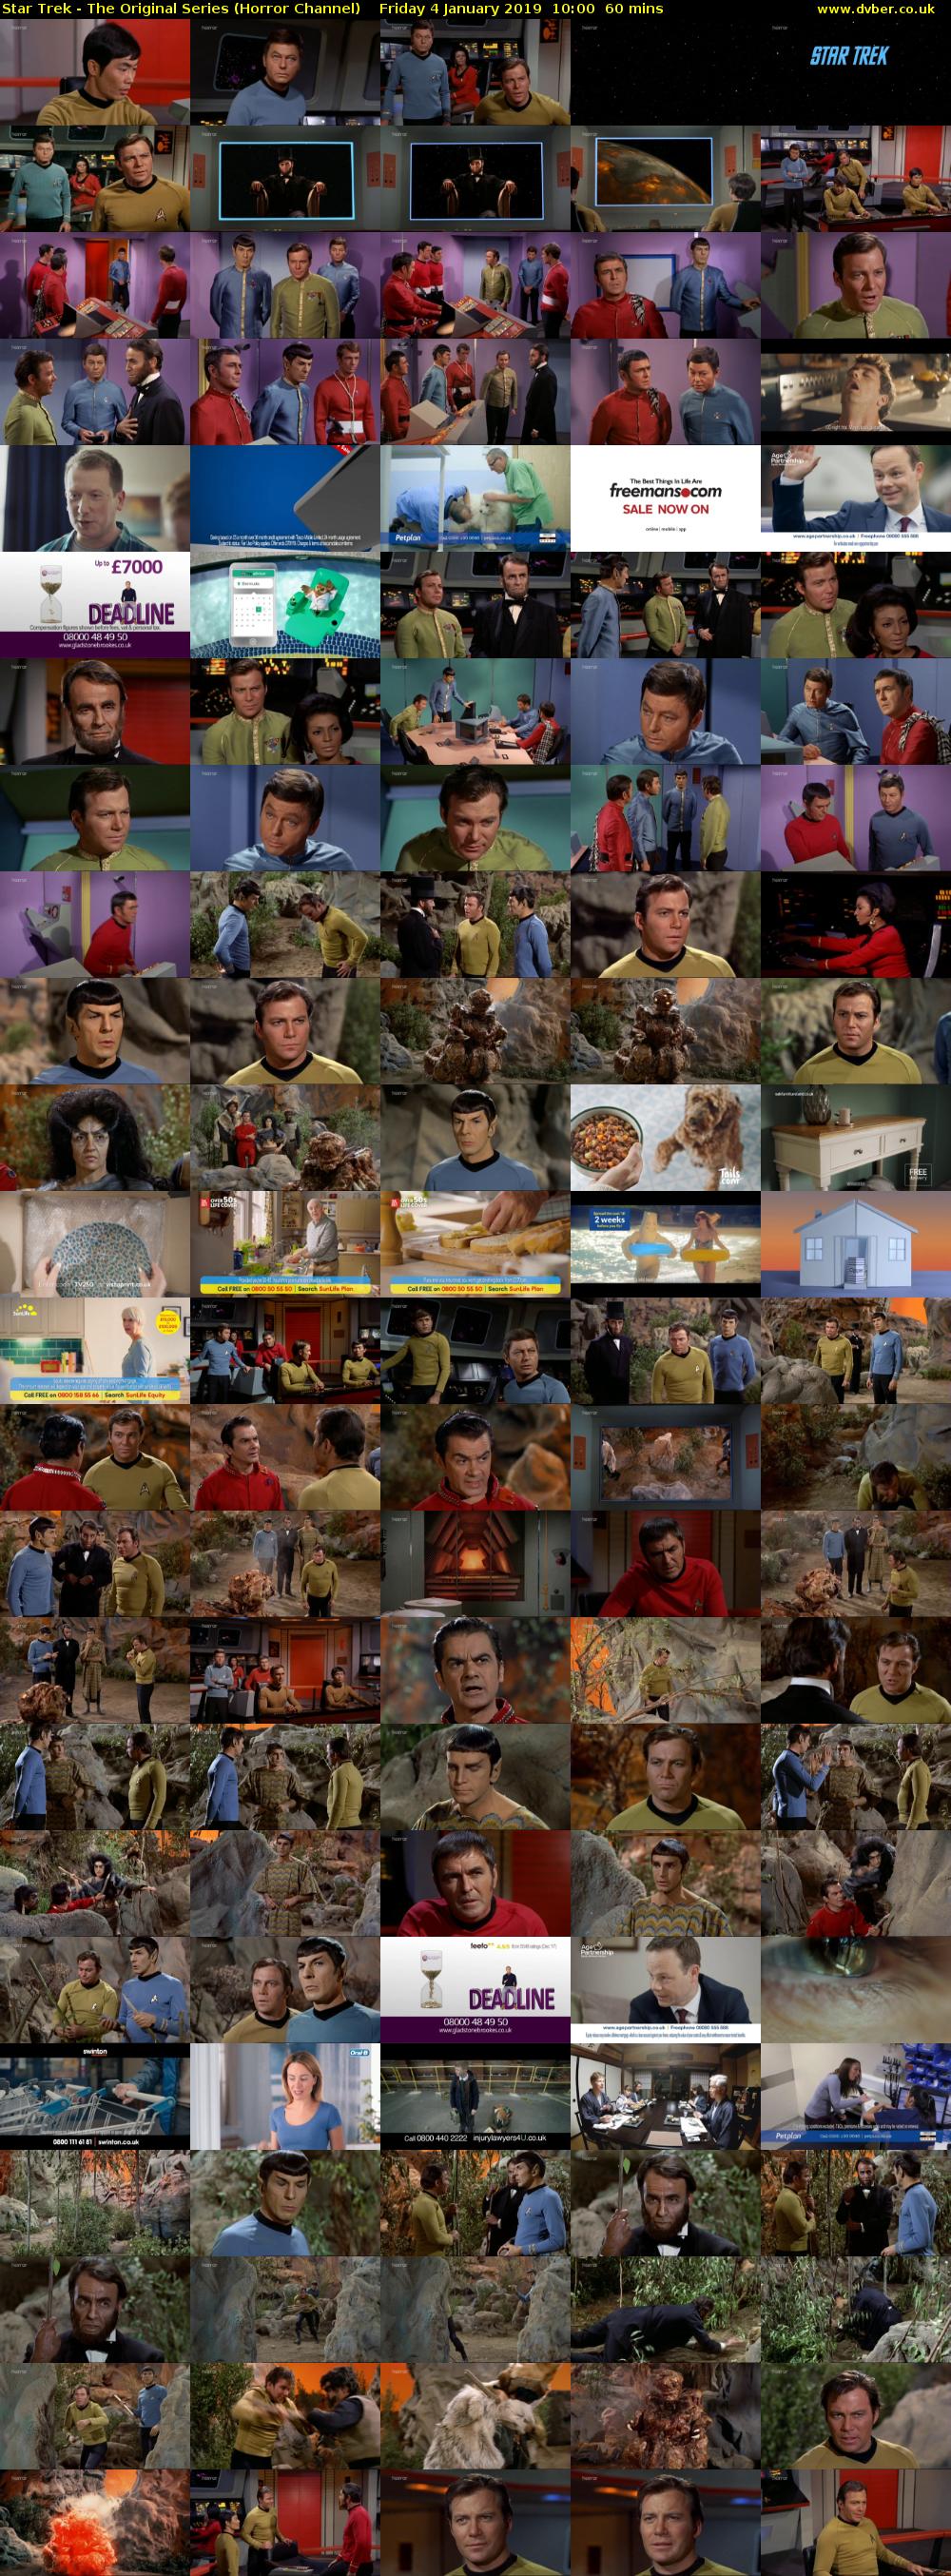 Star Trek - The Original Series (Horror Channel) Friday 4 January 2019 10:00 - 11:00